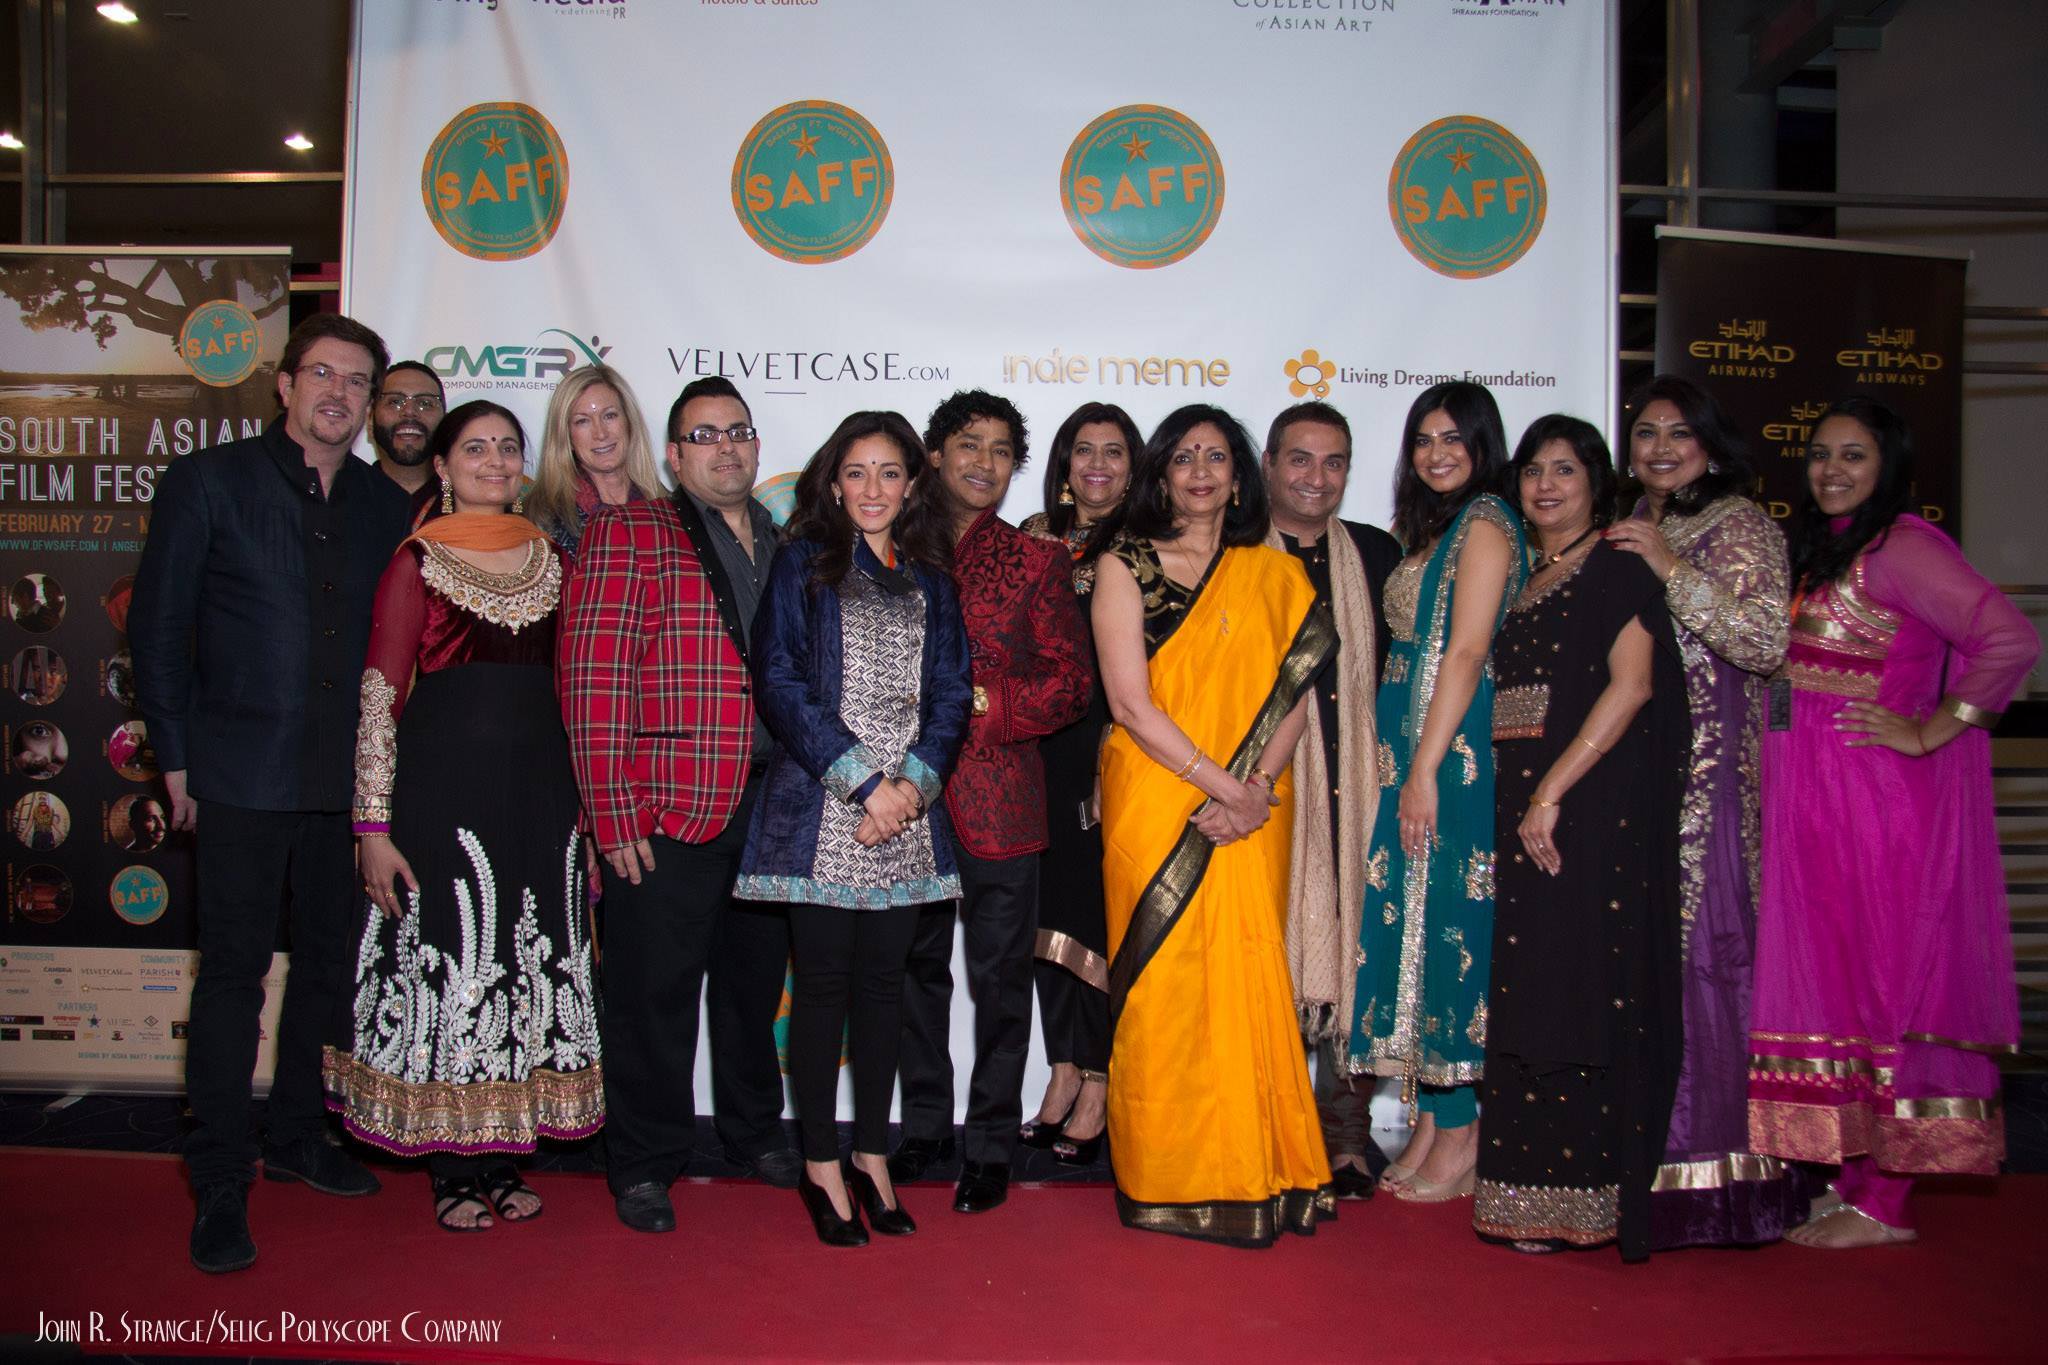 Third Annual Dallas South Asian Film Festival opens March 3